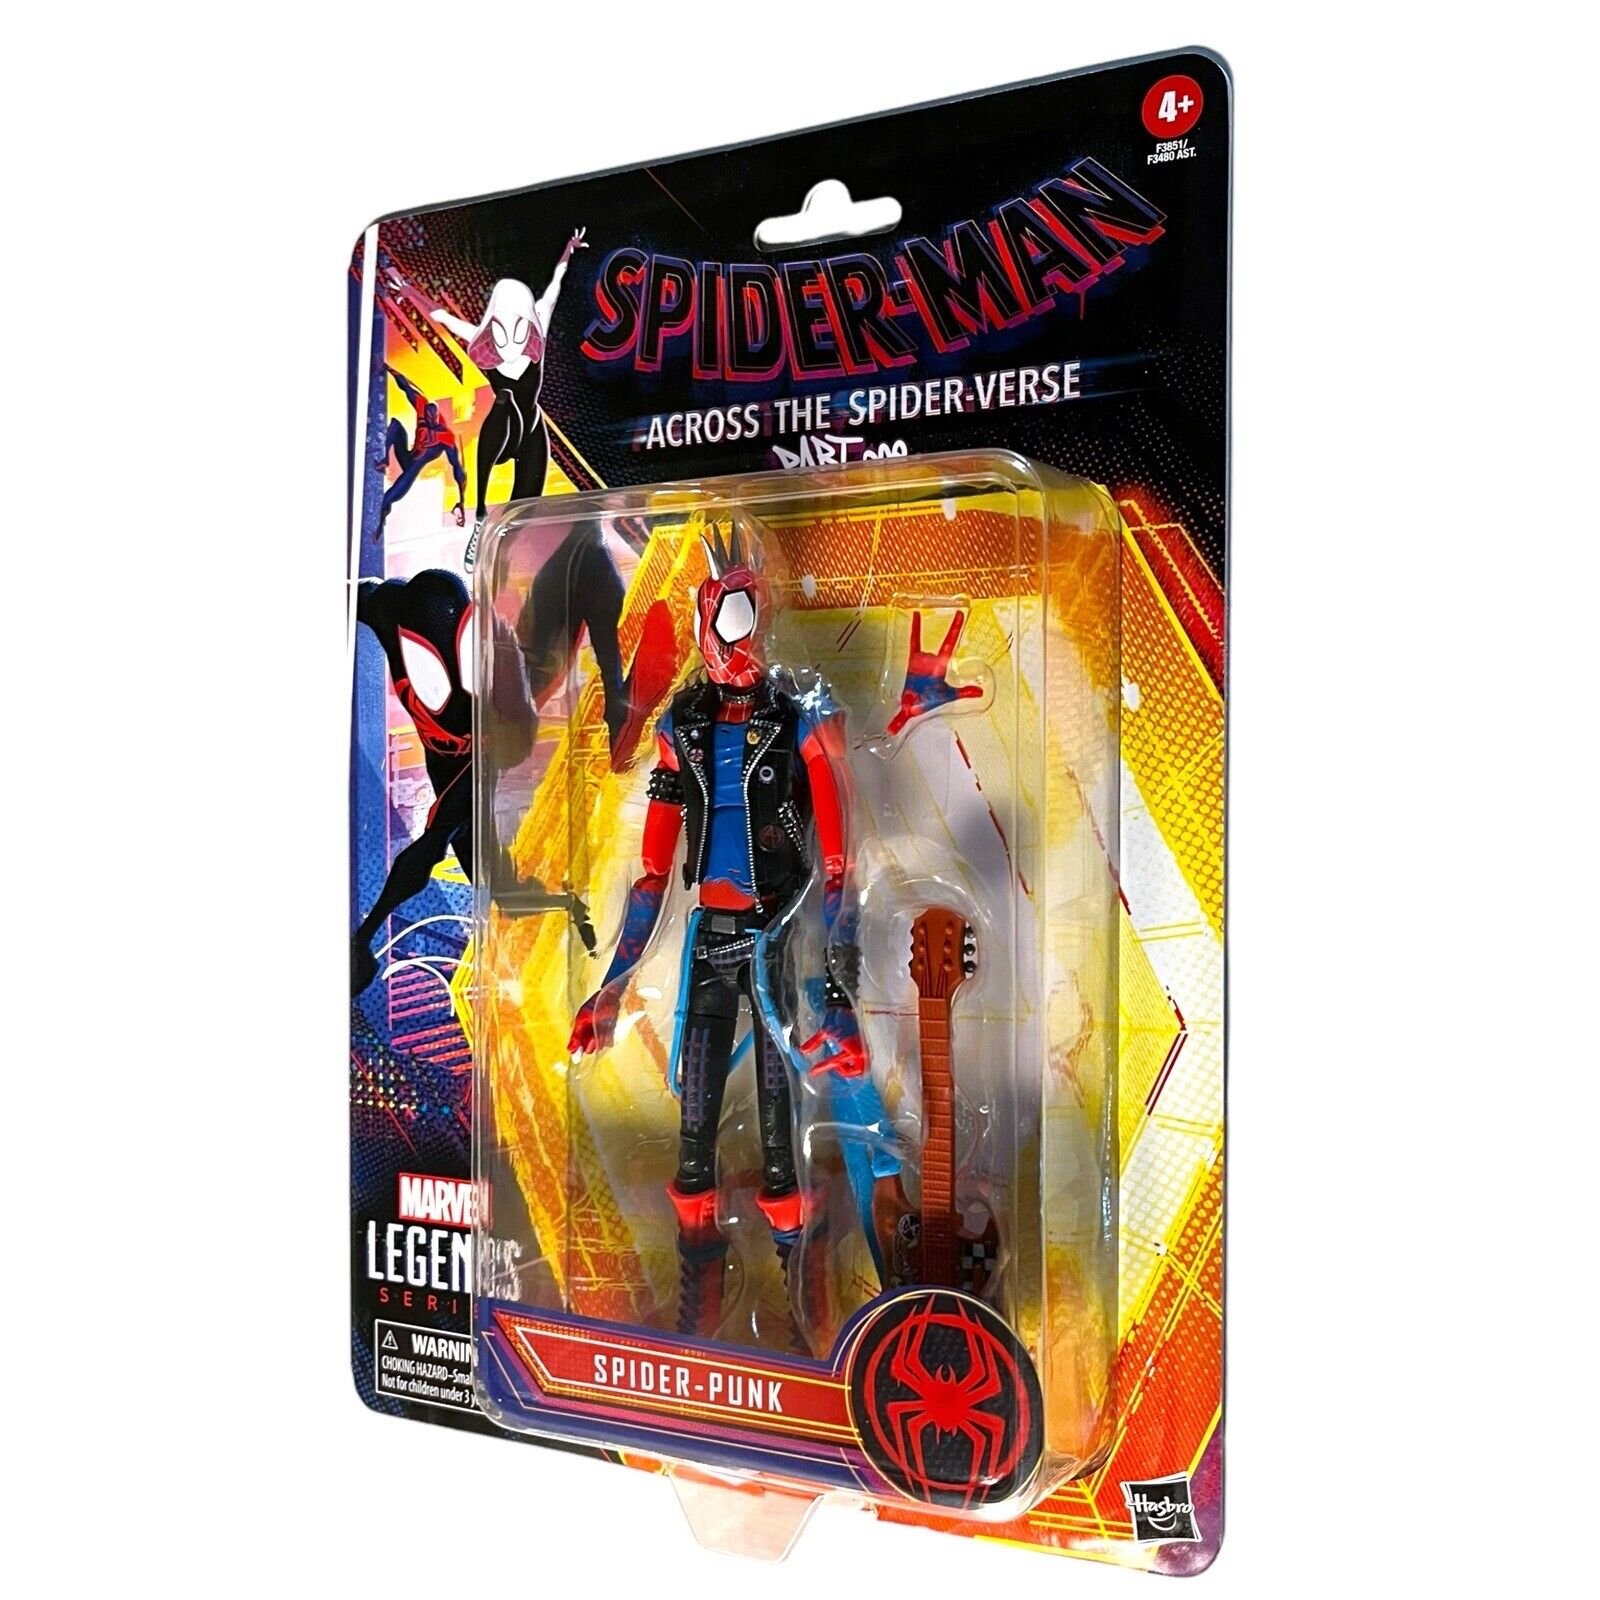 Marvel Legends Spider Punk Spiderman Across the Spider-verse 6” Figure New Fast Hasbro - фотография #5